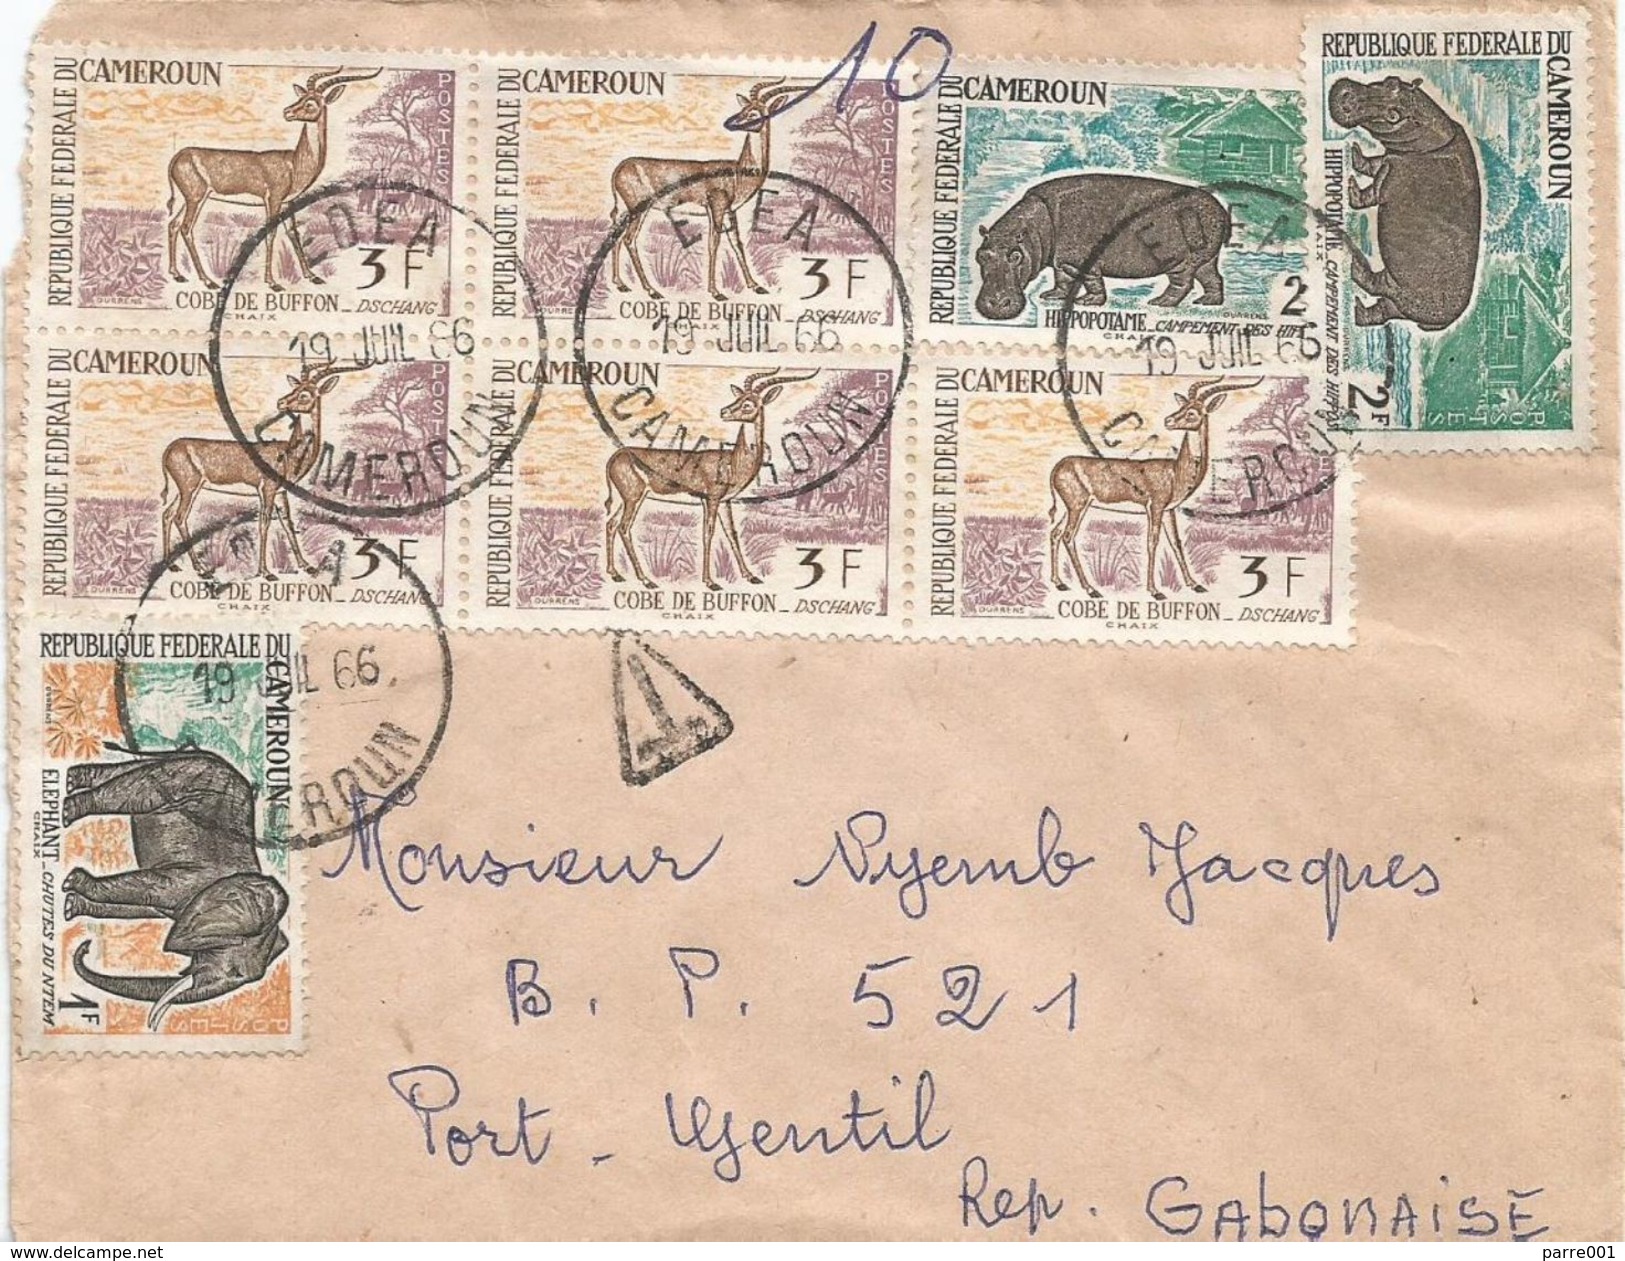 Gabon Cameroun 1966 Edea Taxed Hippo Elephant Underfranked Cover Fruit Postage Due Porto - Gabón (1960-...)